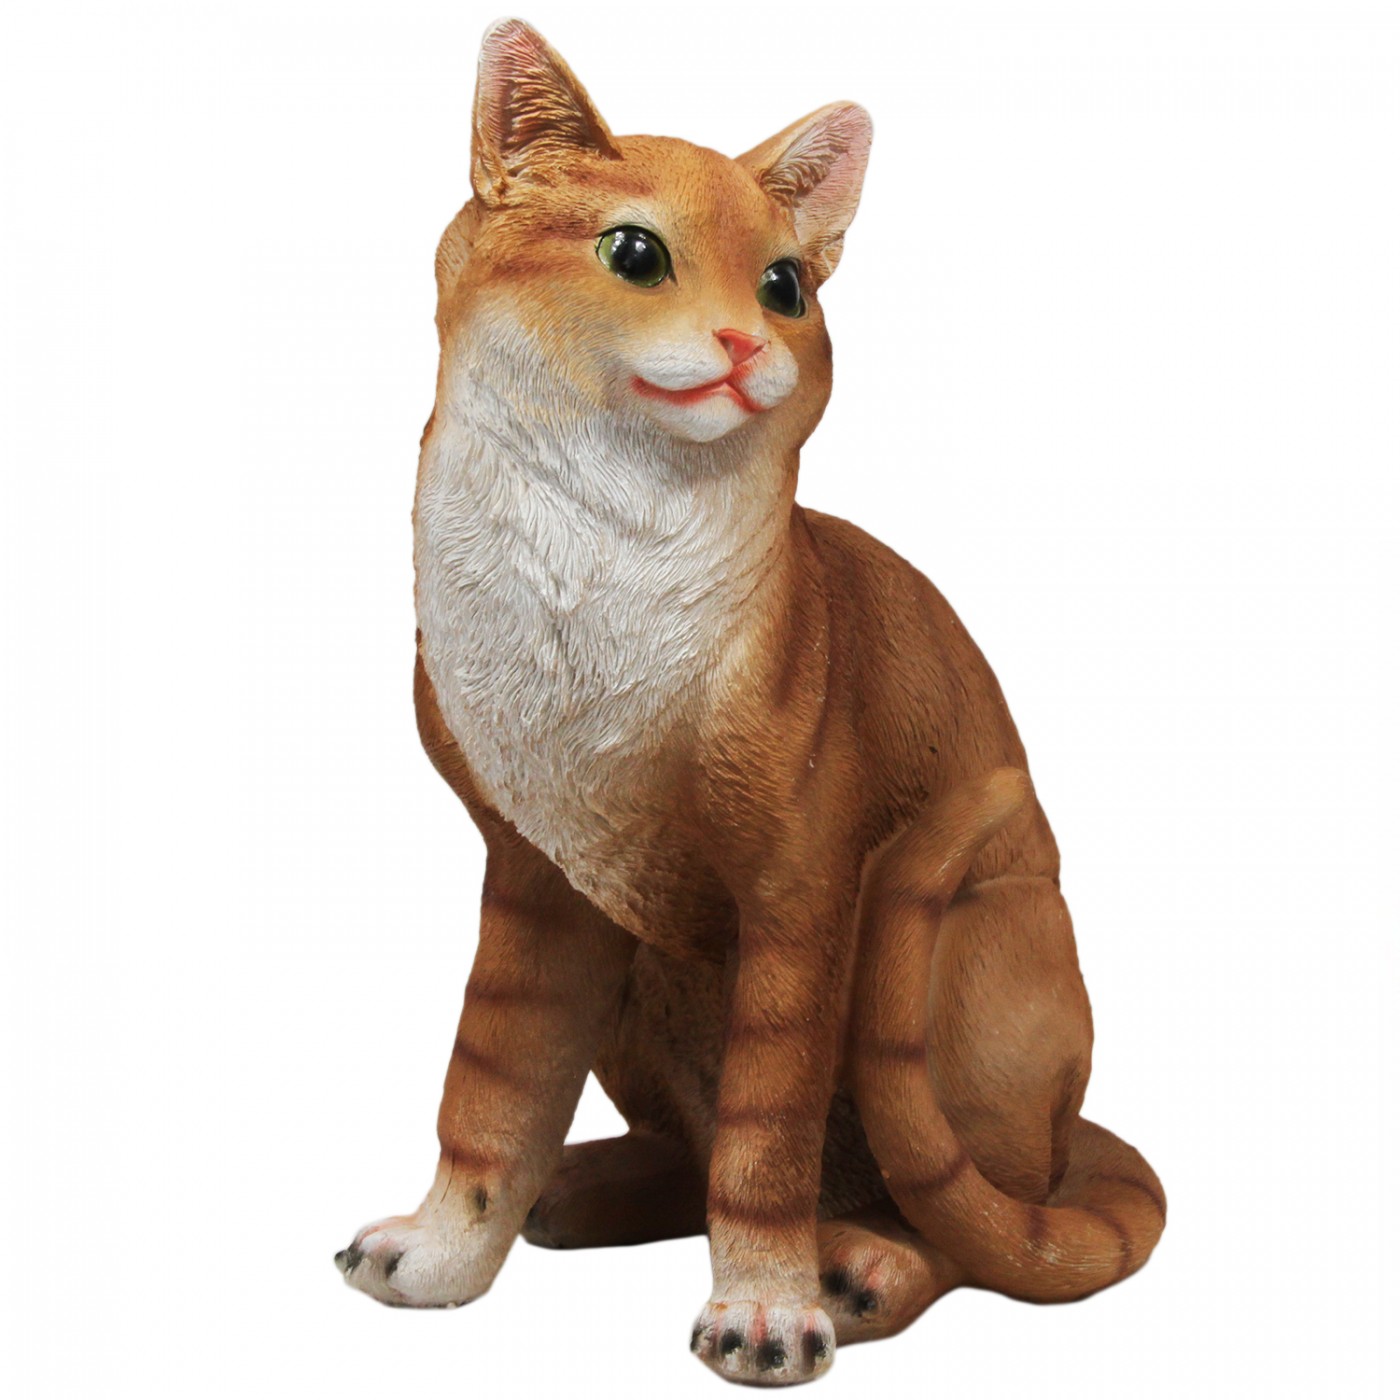 Figurka kot duży rudy